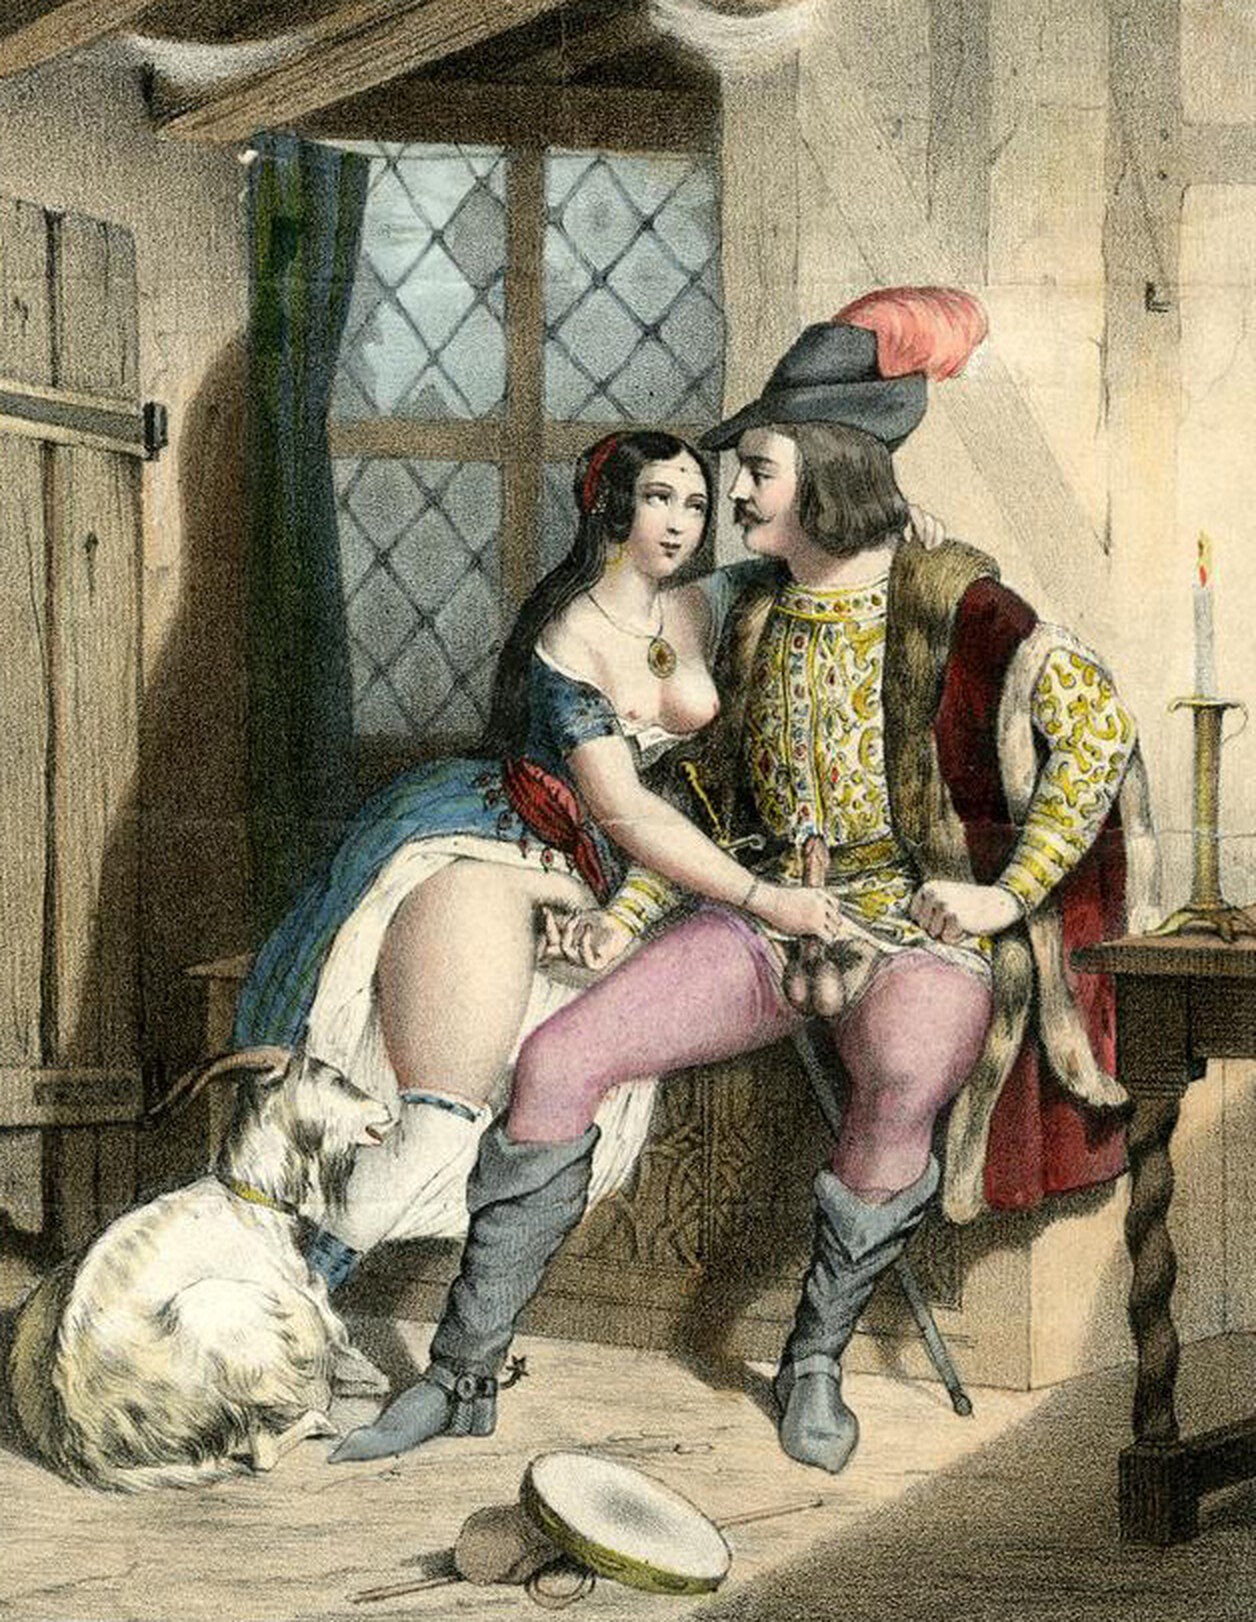 Vintage French Erotic Art - 19th Century Postcards (55 photos) - motherless porn pics